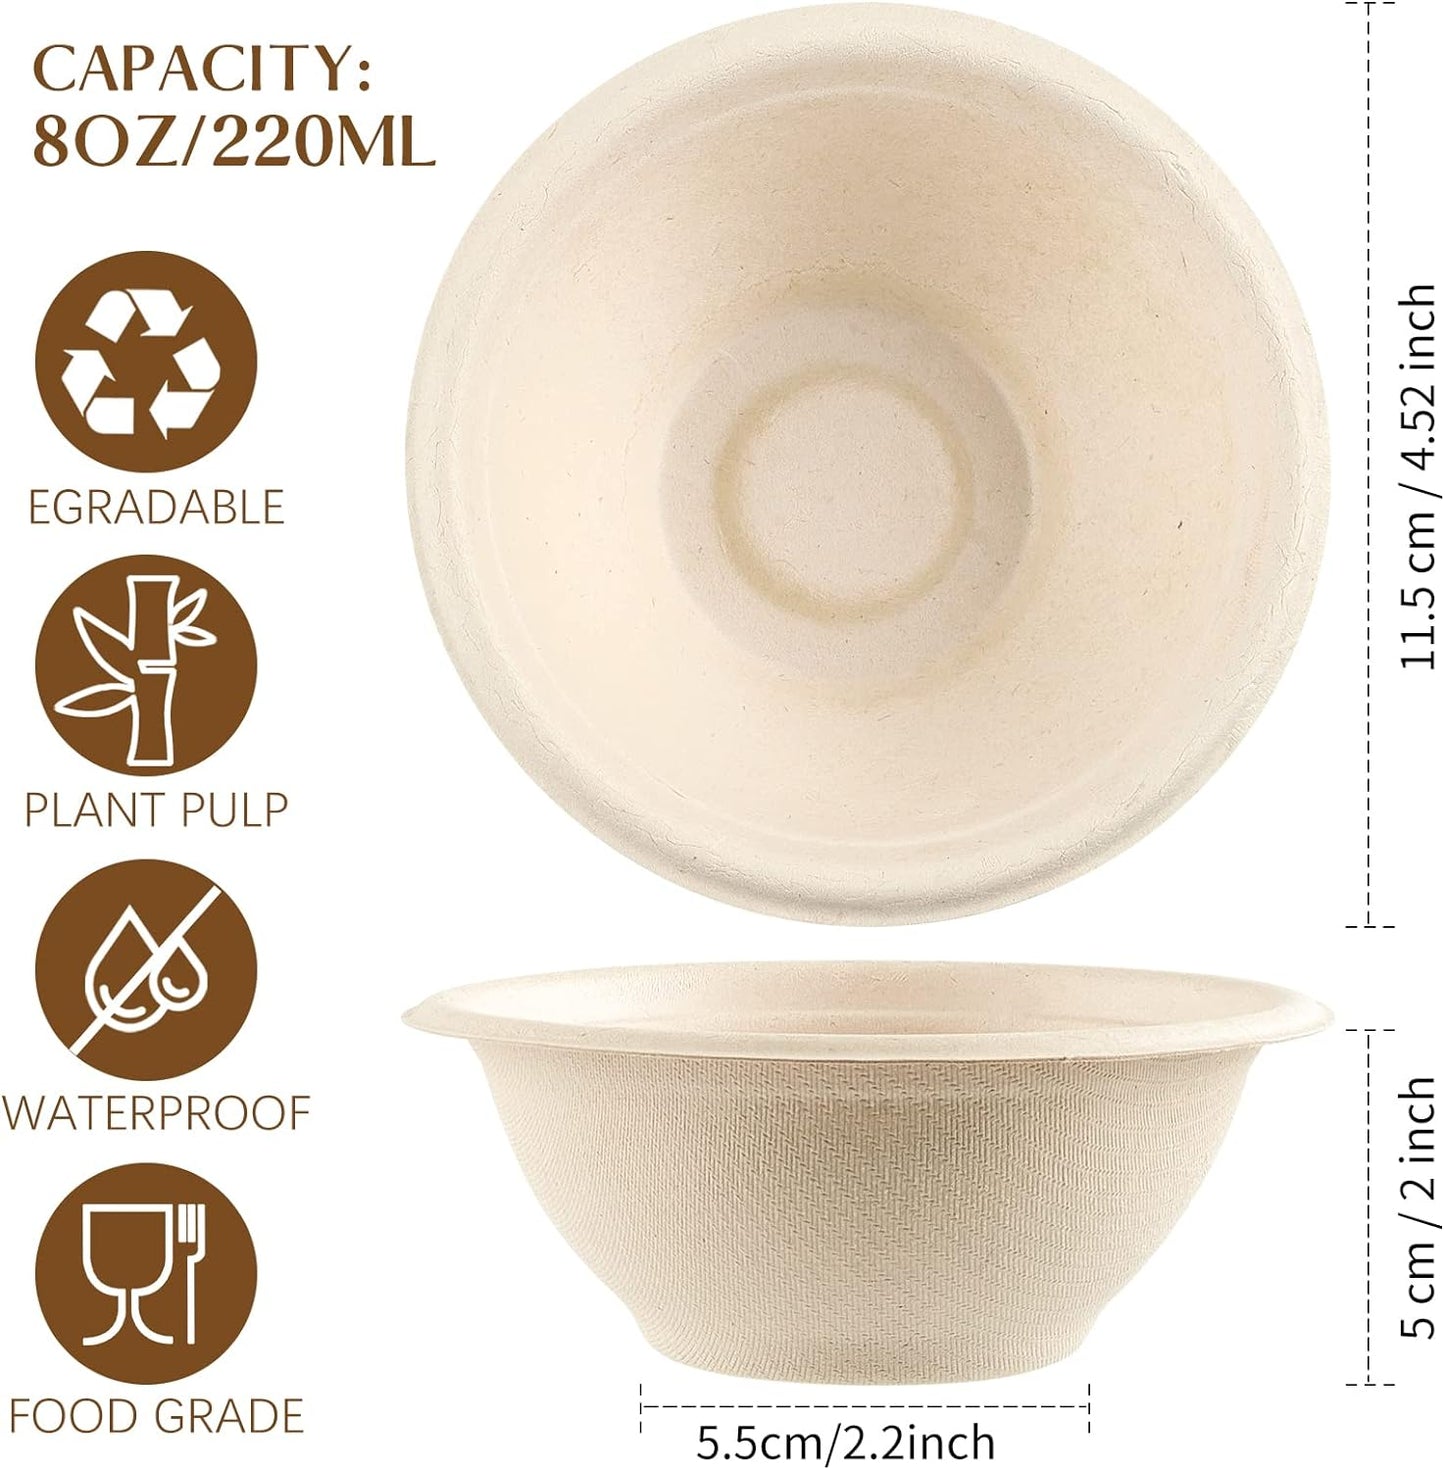 Flowcheer 150 Pack 8 oz Paper Bowls Disposable Small Compostable Soup Bowls Natural Sugarcane Biodegradable Bowls - Flowcheer